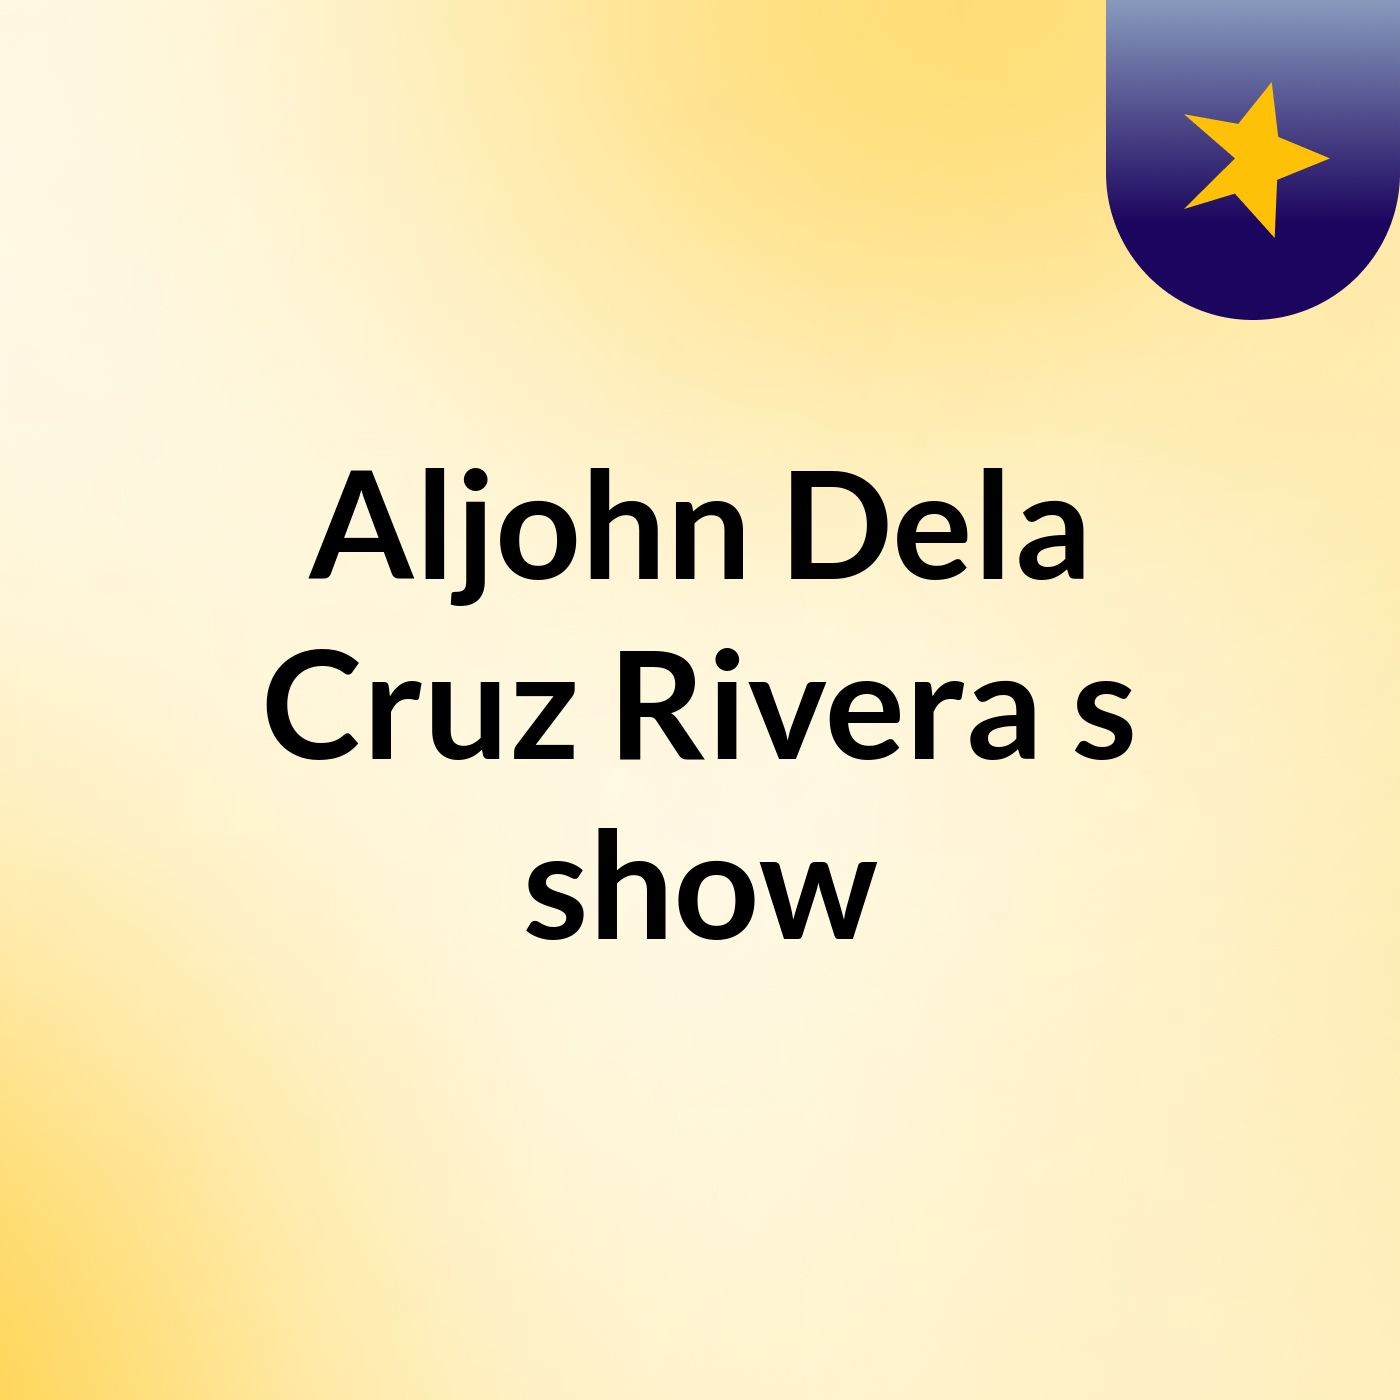 Aljohn Dela Cruz Rivera's show